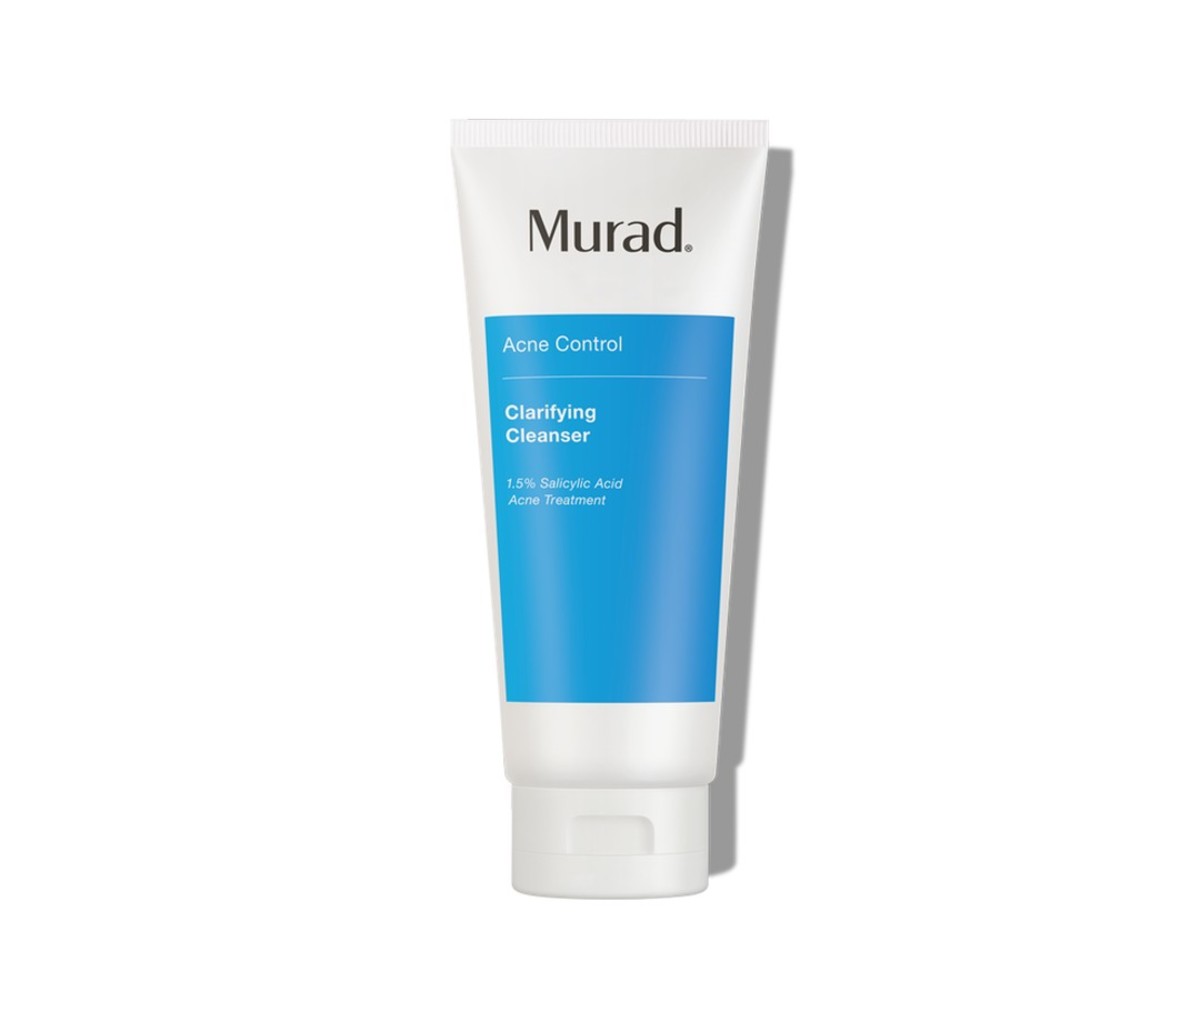 Murad Acne Control Clarifying Cleanser